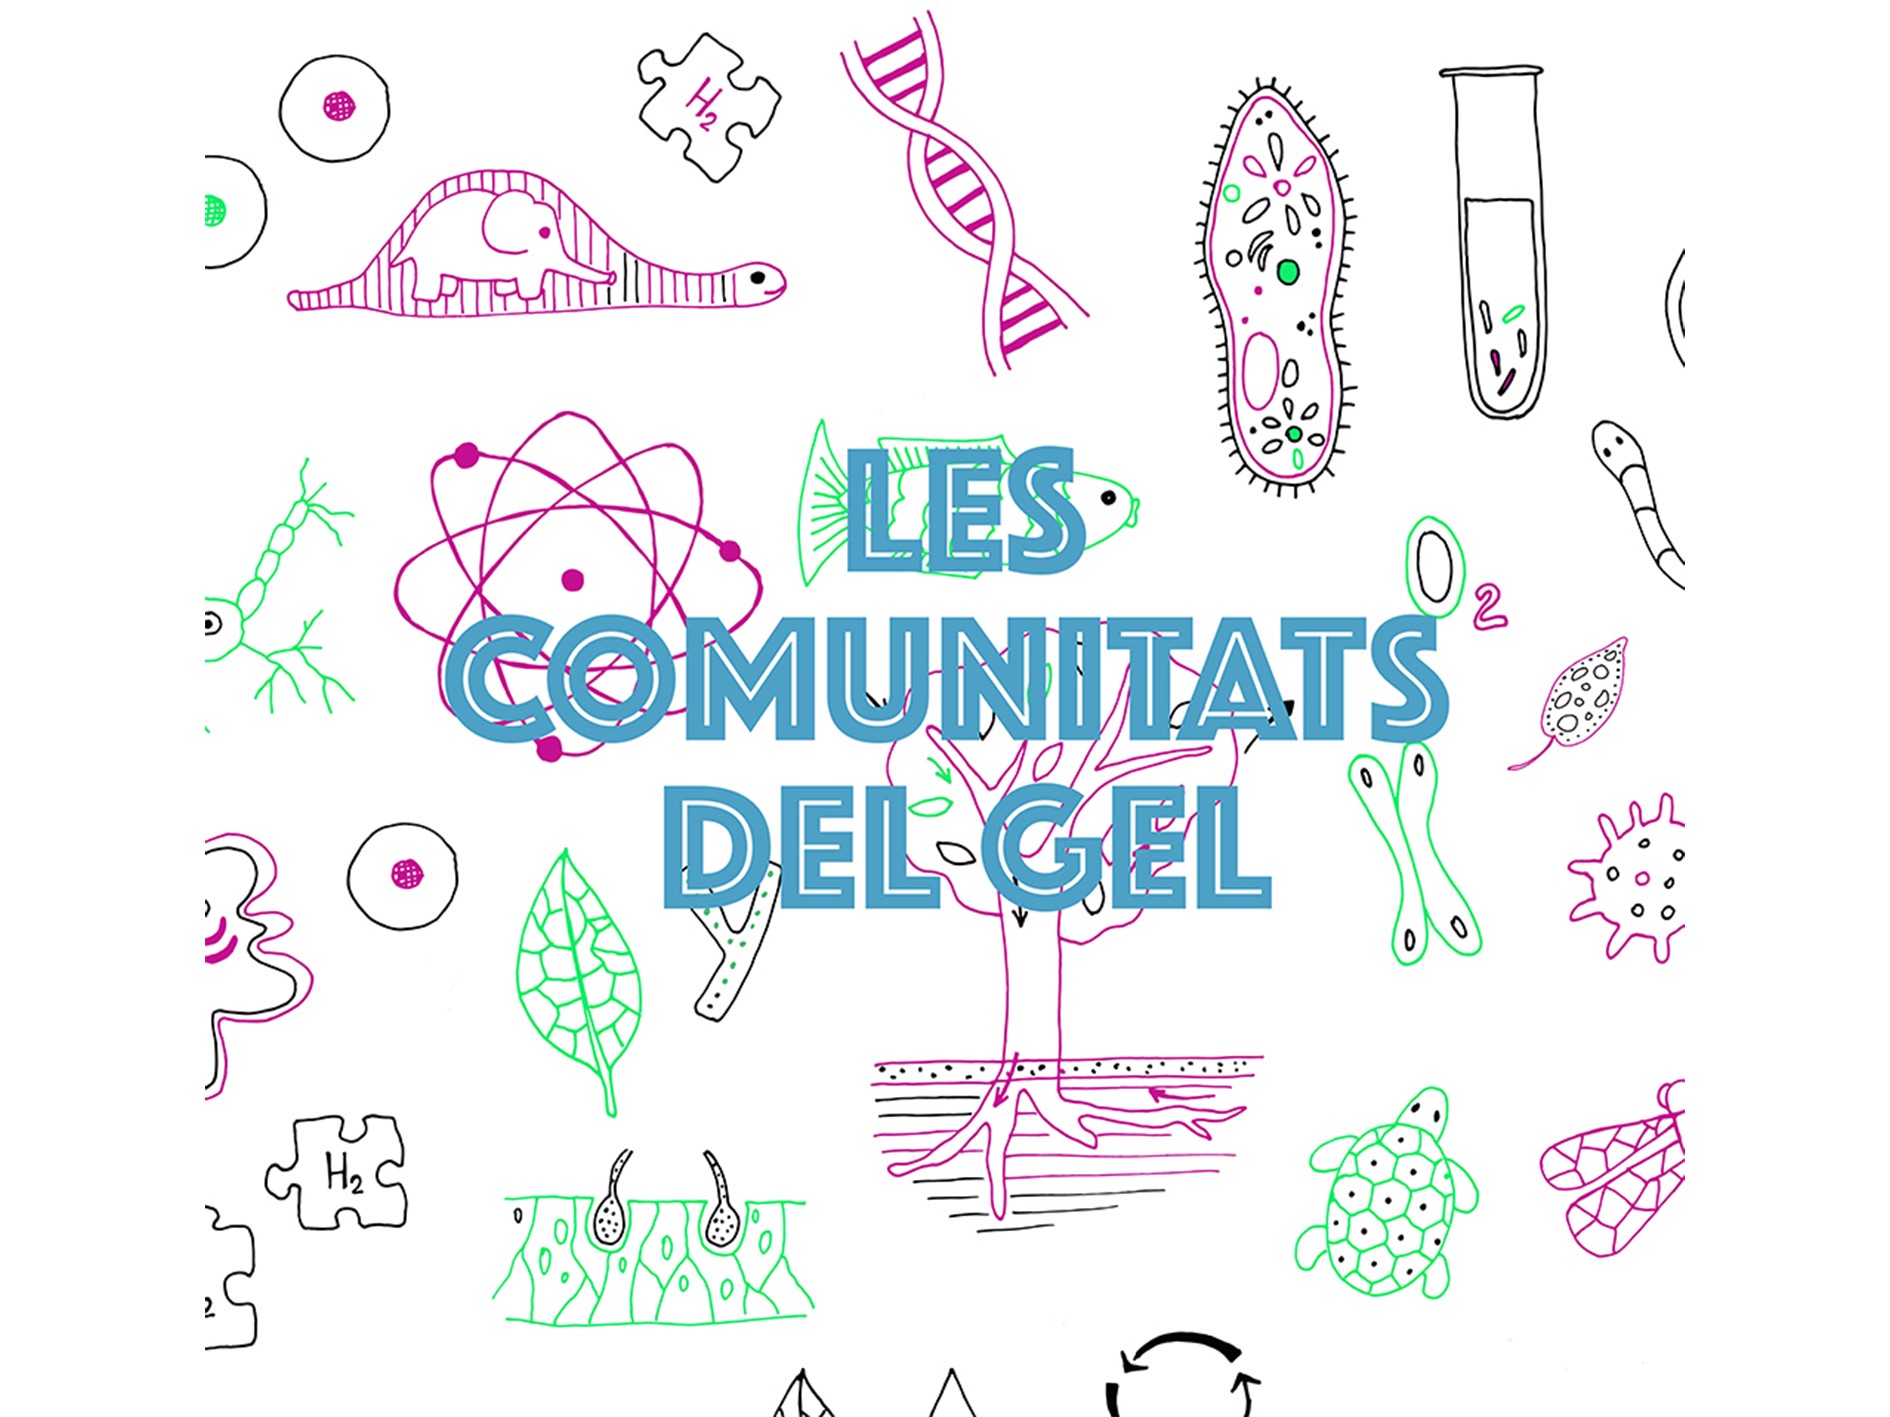 La Panera organizes an “Ice Communities” workshop with artist Una Bros